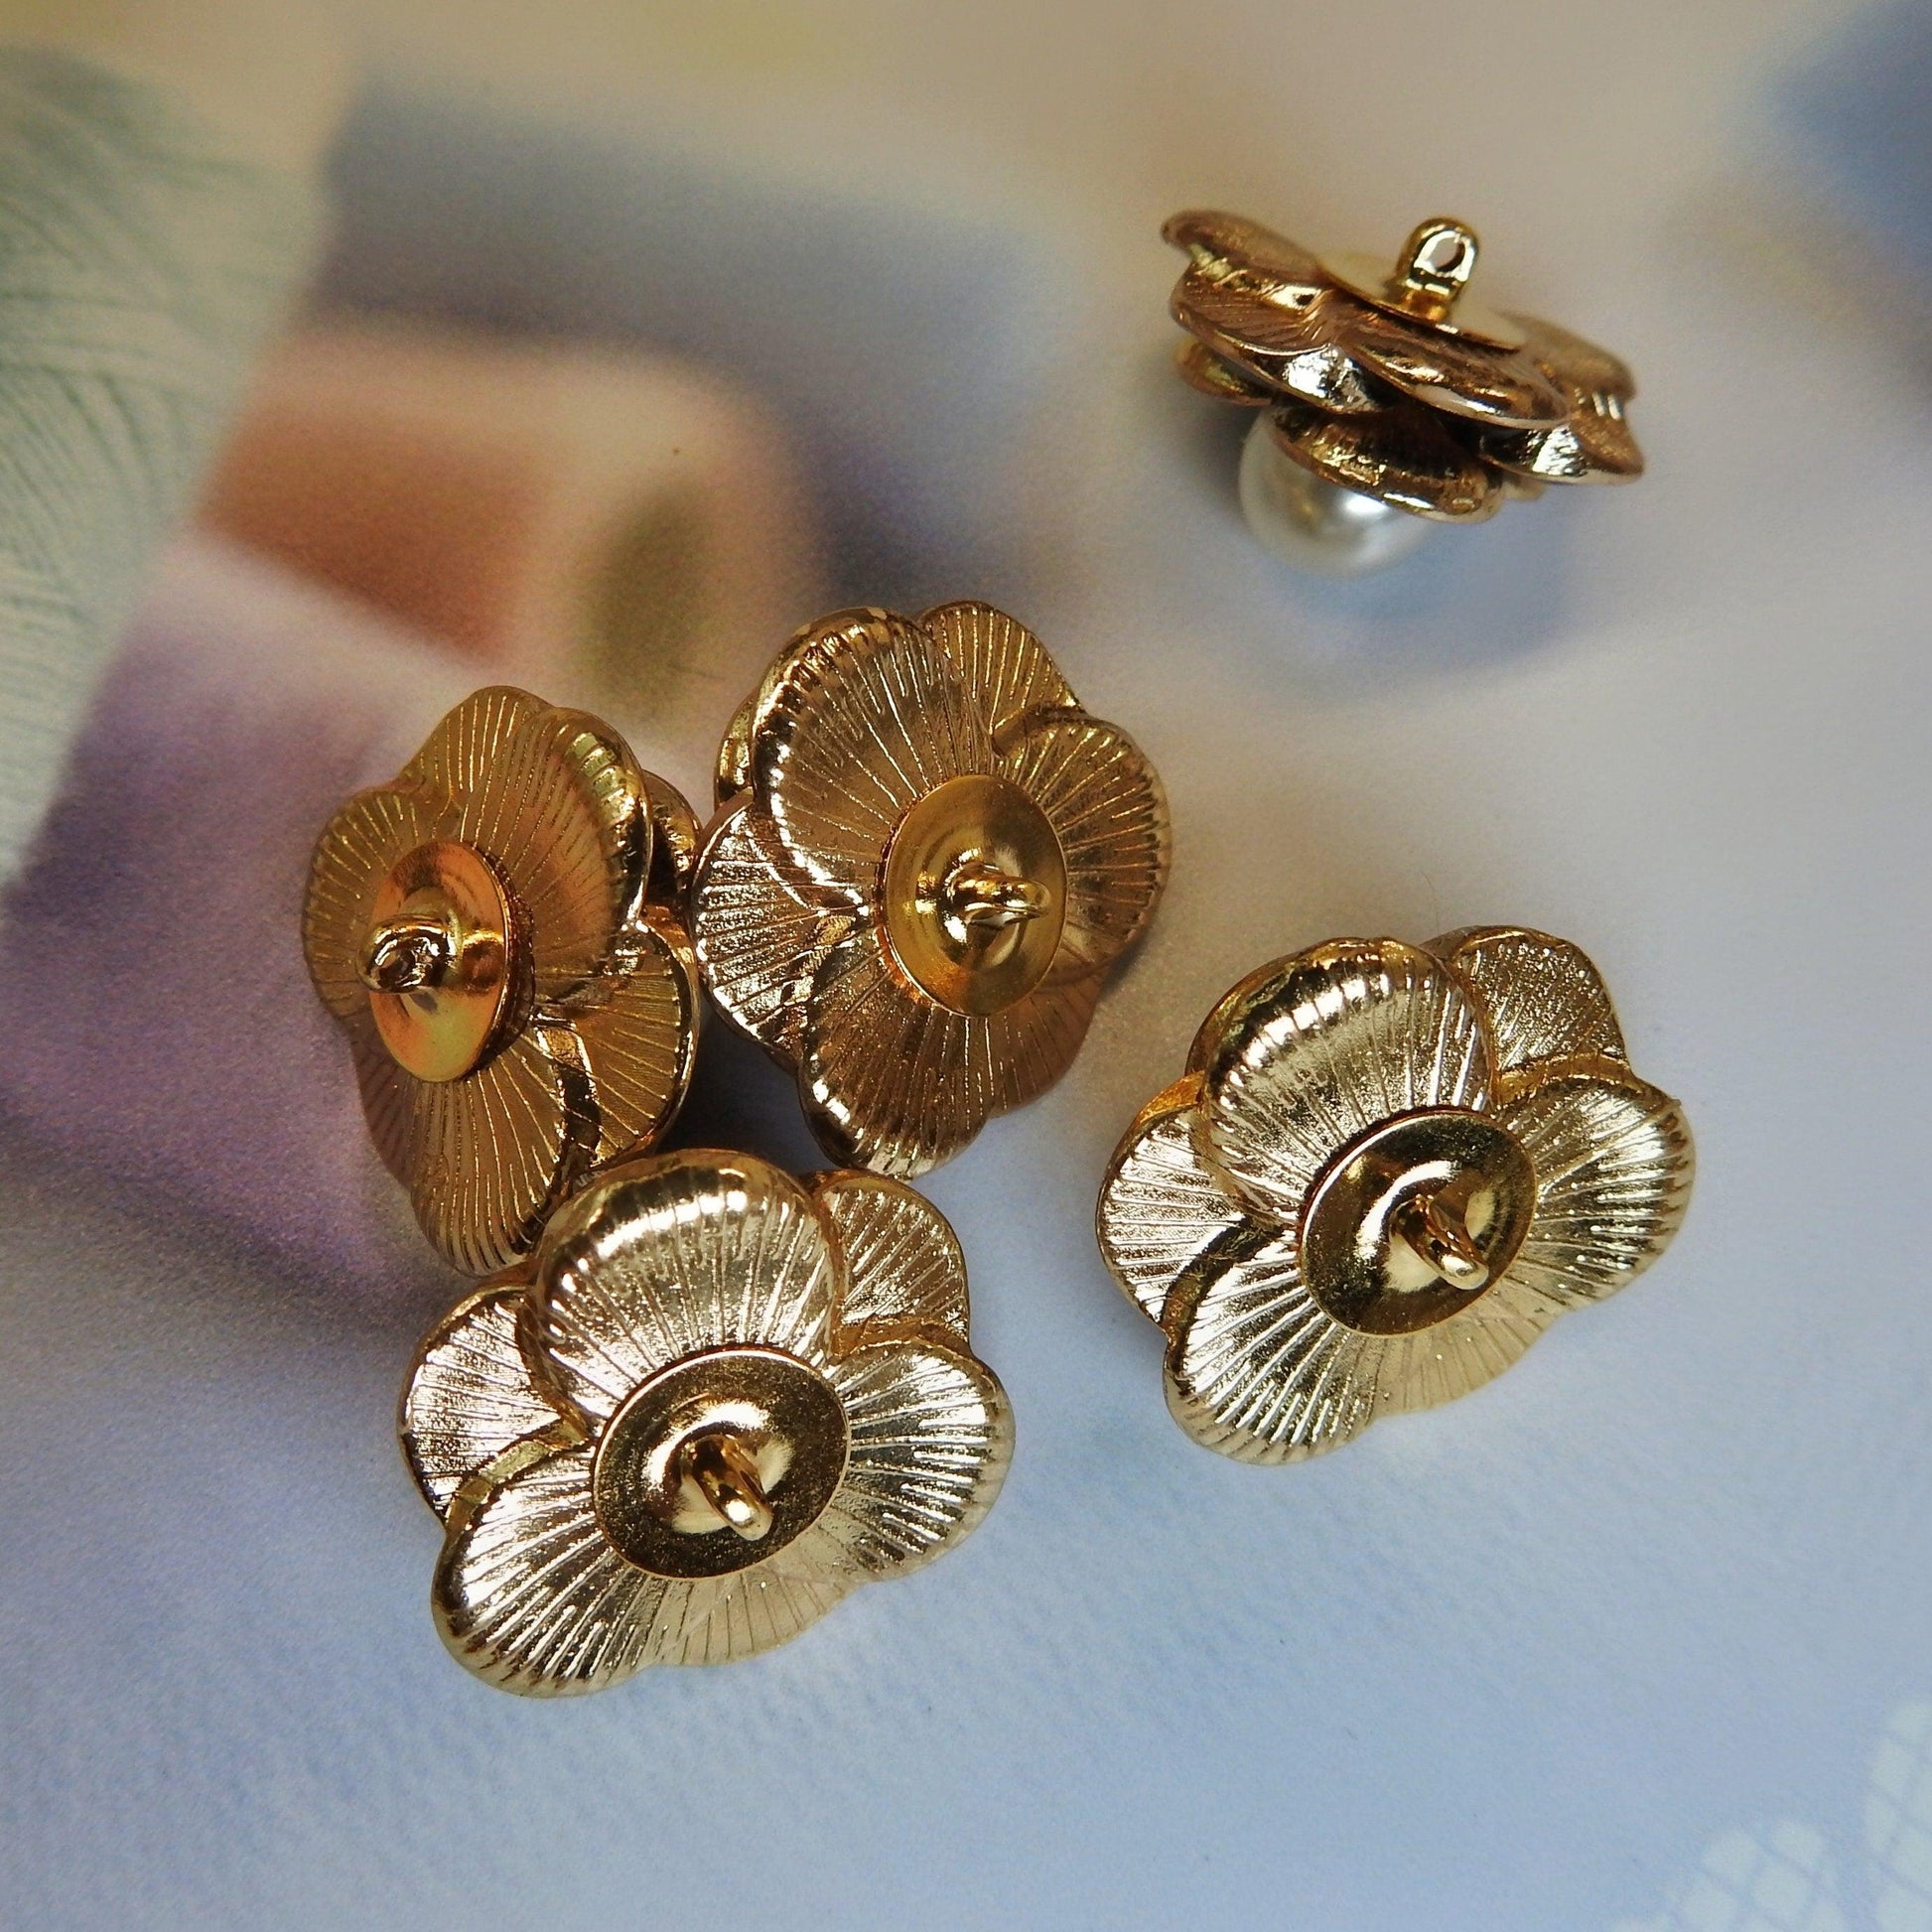 Camelia flower buttons